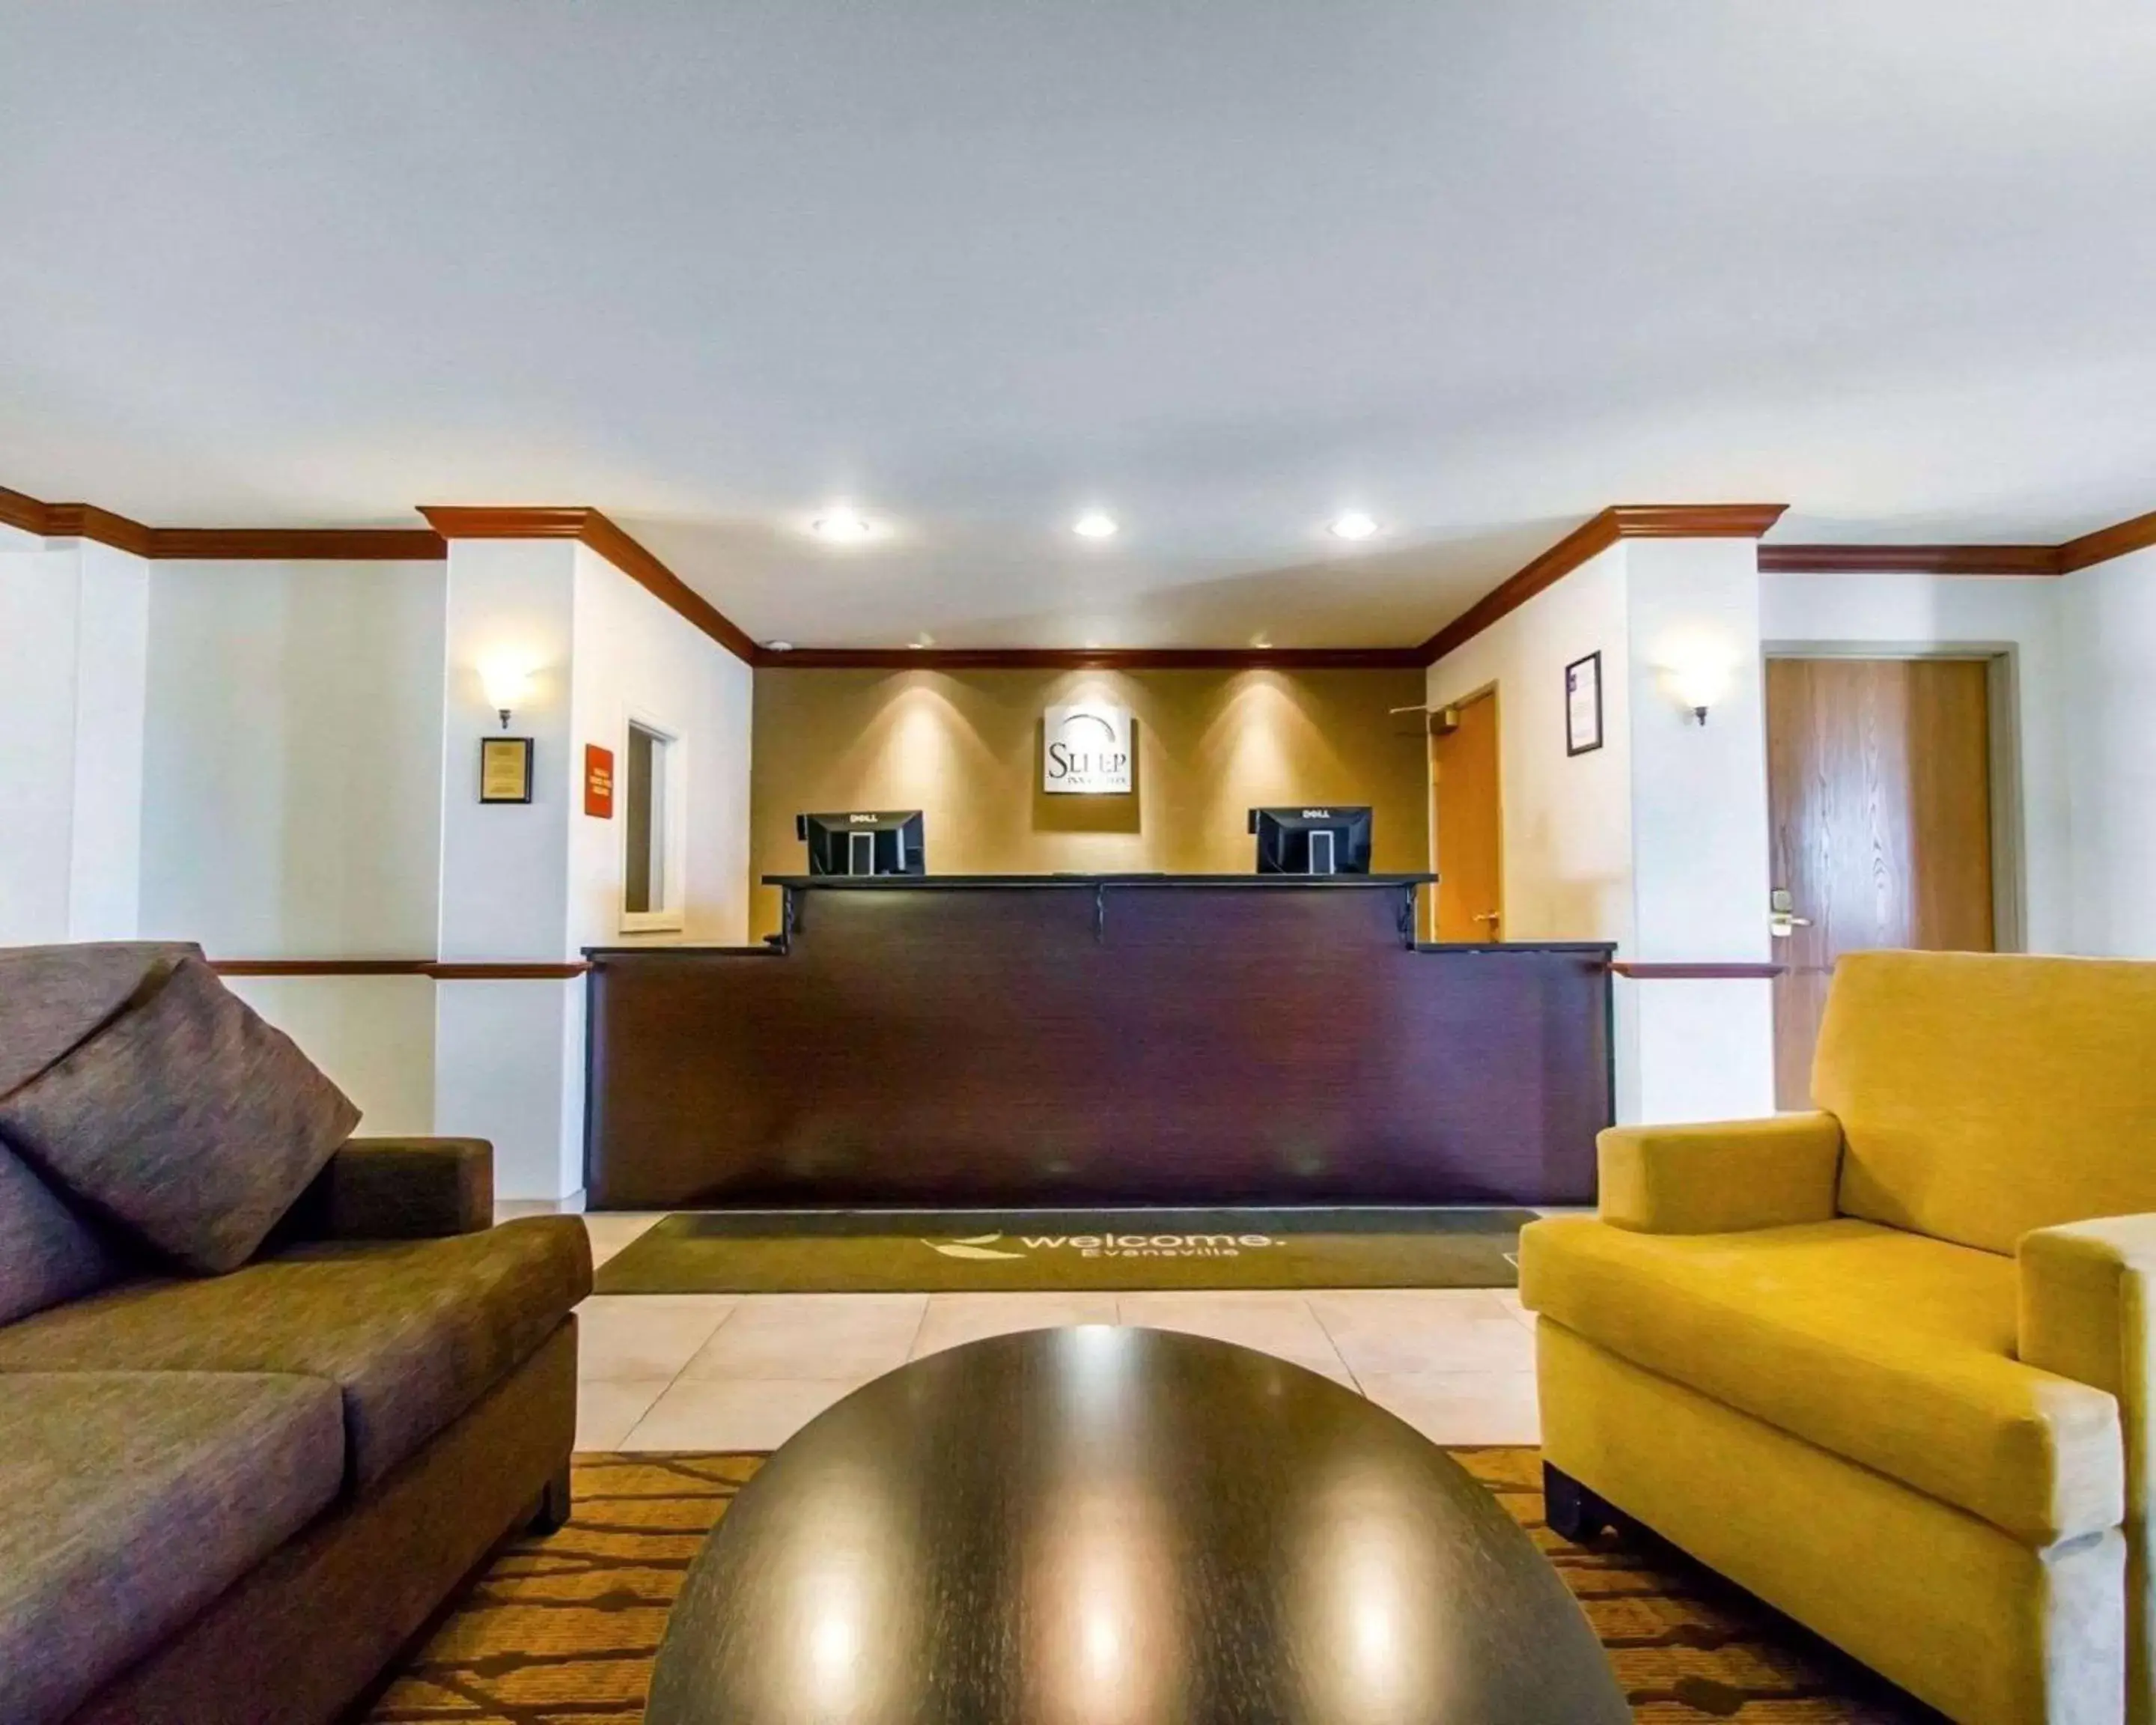 Lobby or reception, Lobby/Reception in Sleep Inn & Suites Evansville